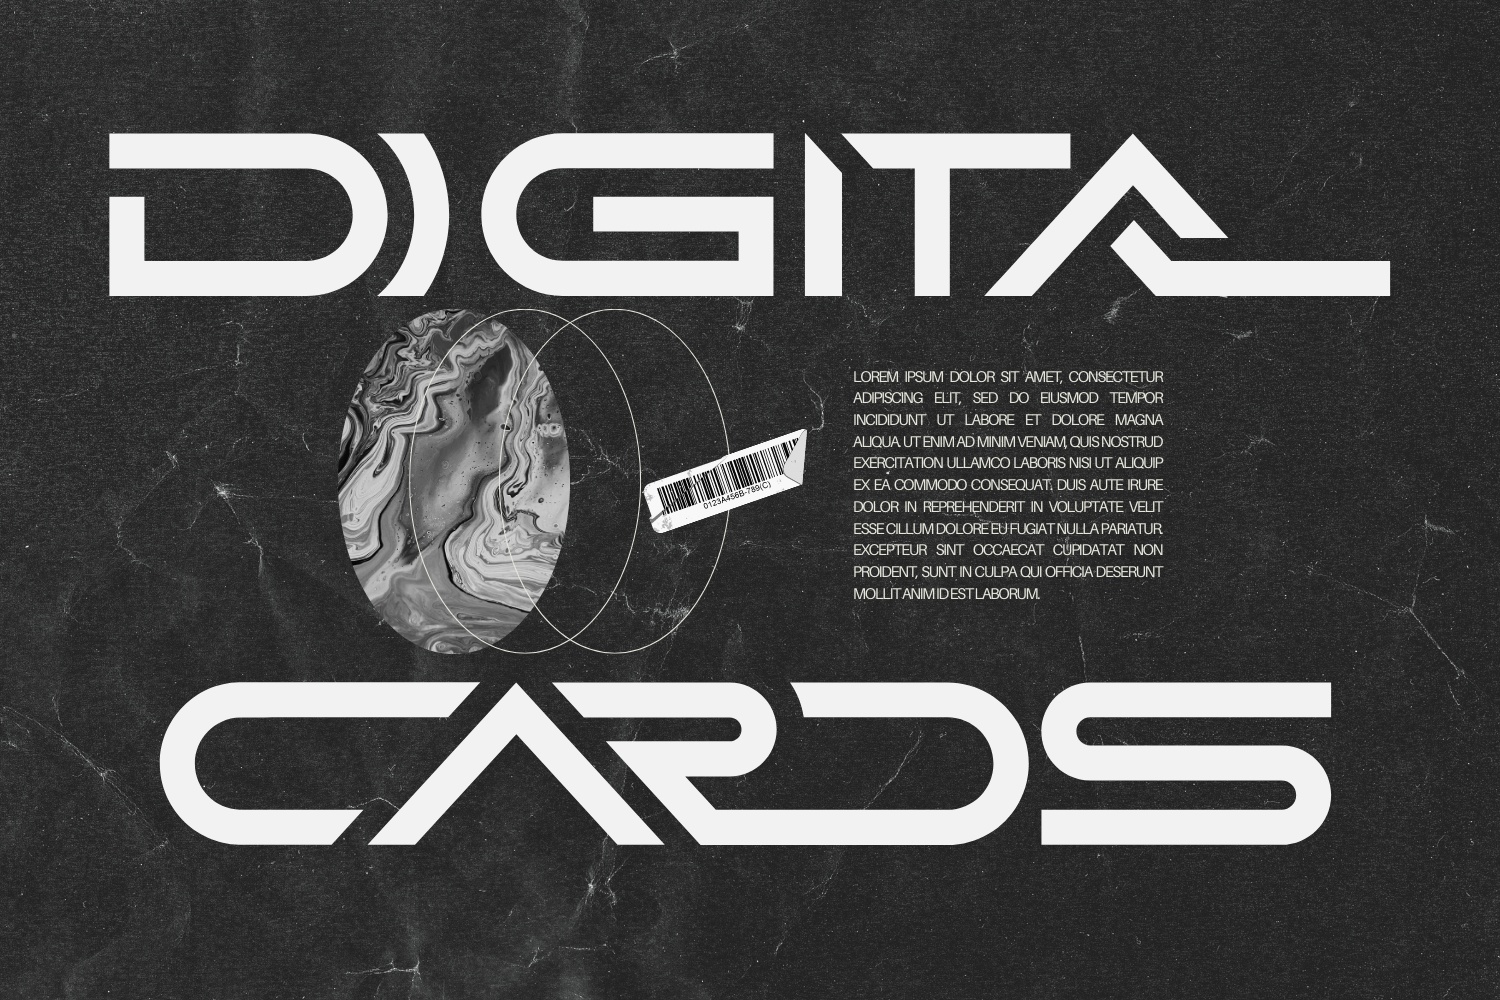 Digital Cards Light Font preview